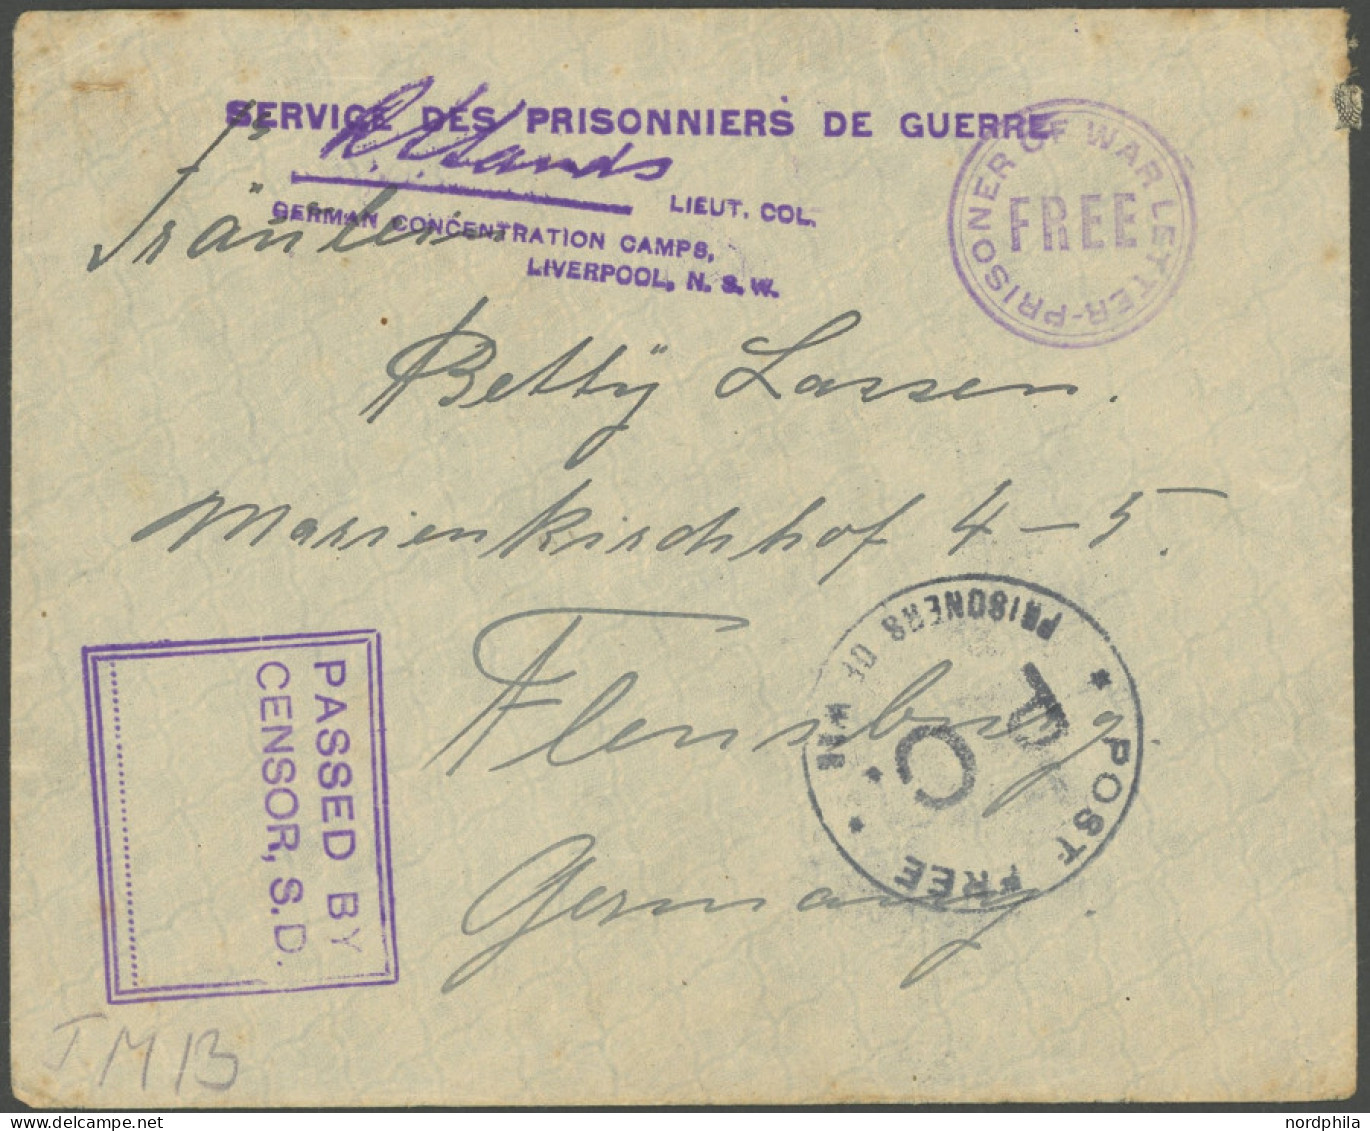 DEUTSCH-NEUGUINEA 1916, Brief Aus Dem Lager Trial Bay Mit Violettem Zensurstempel L4 LIEUT.COL. 1GERMAN CONCENTRATION CA - Nueva Guinea Alemana